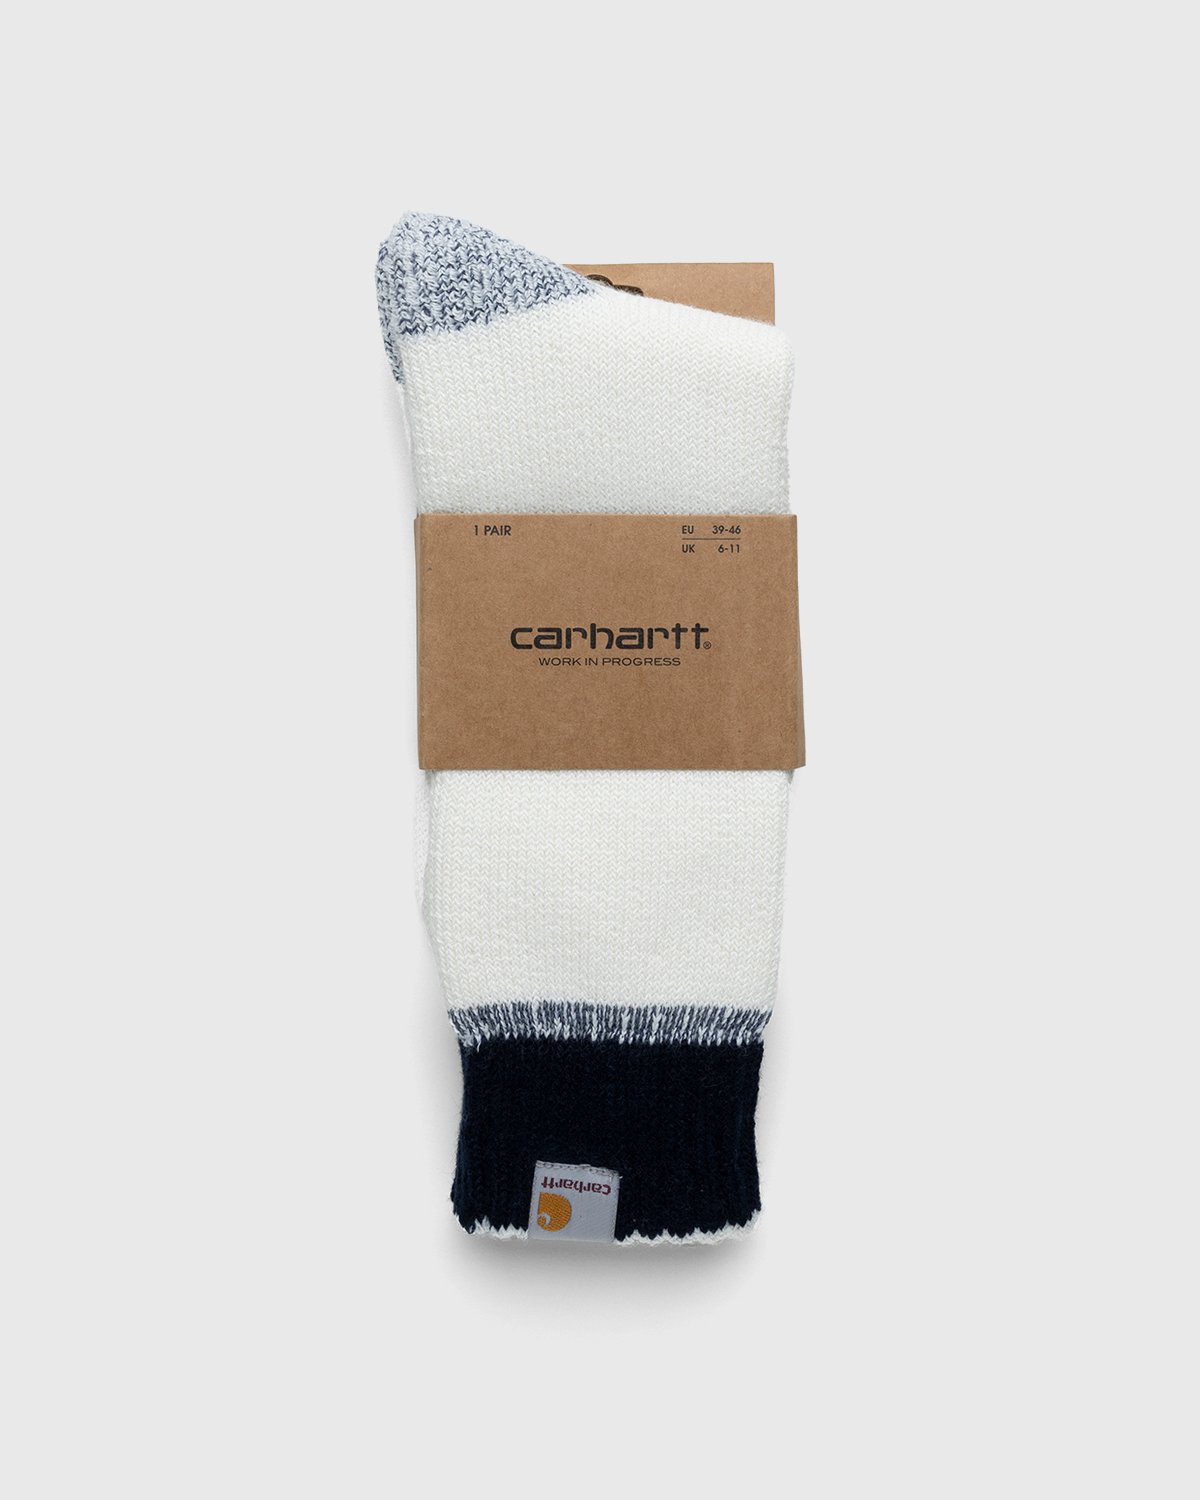 Carhartt WIP - Ontario Socks Way Dark Navy - Accessories - White - Image 2